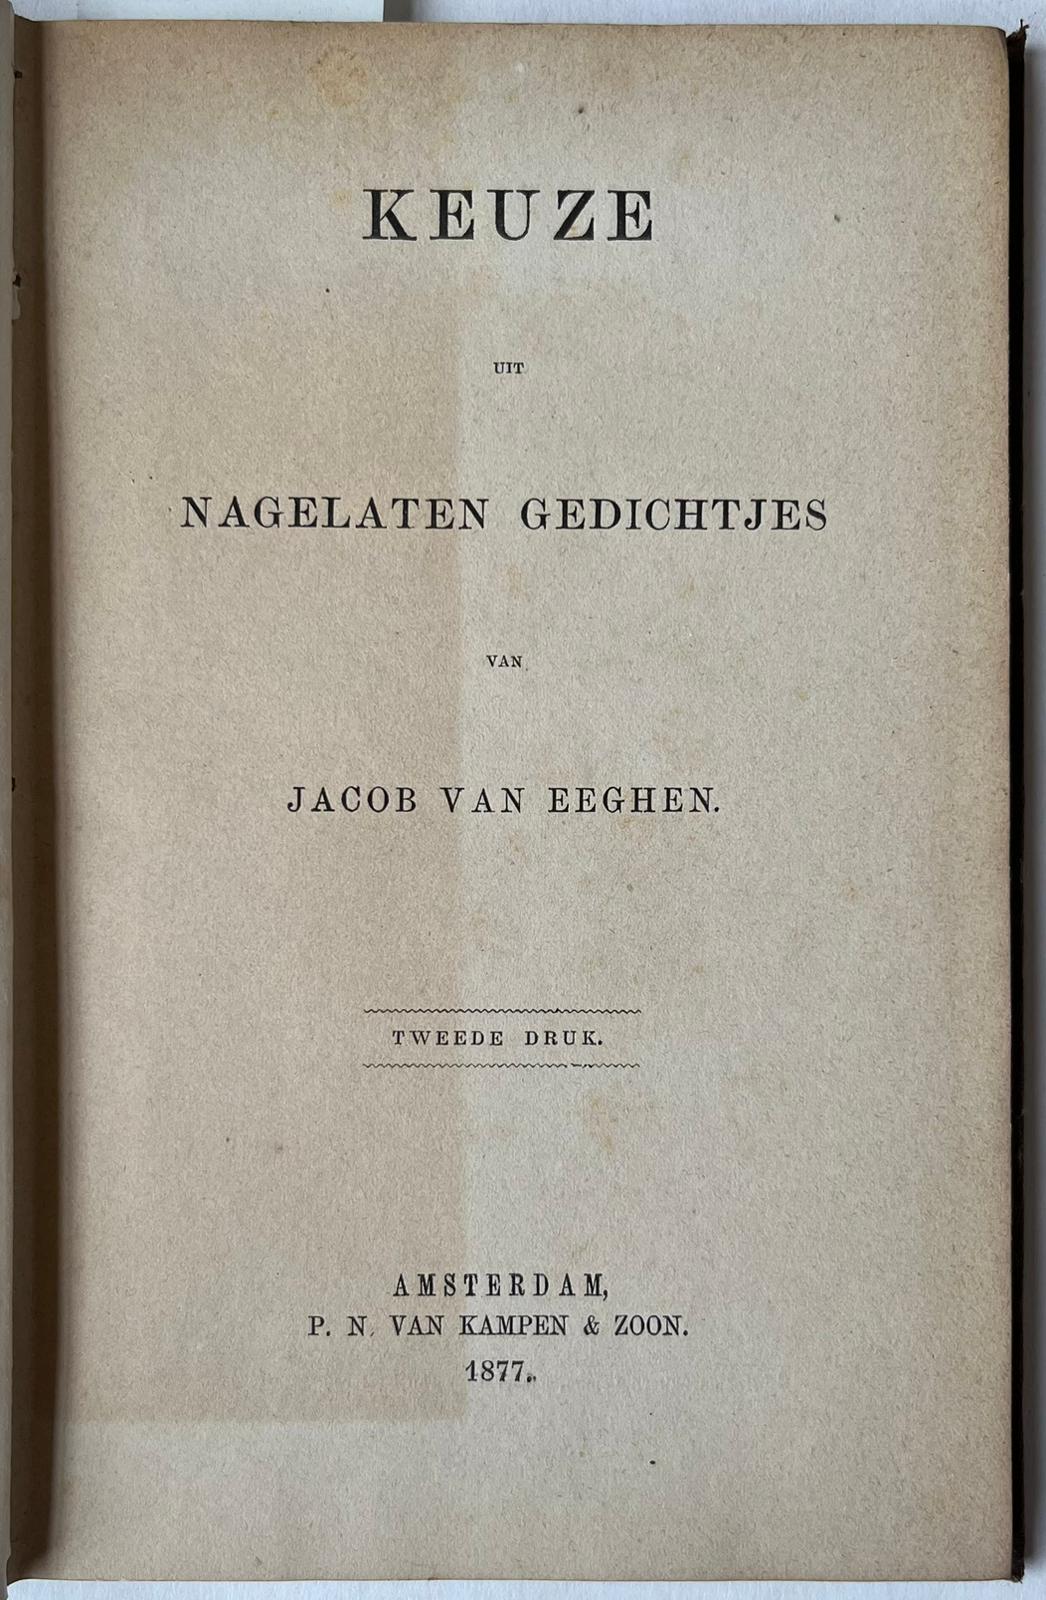 [Literature 1877] Keuze uit nagelaten gedichtjes. 2e druk. Amsterdam, P.N. van Kampen & zoon, 1877, 144 pp.